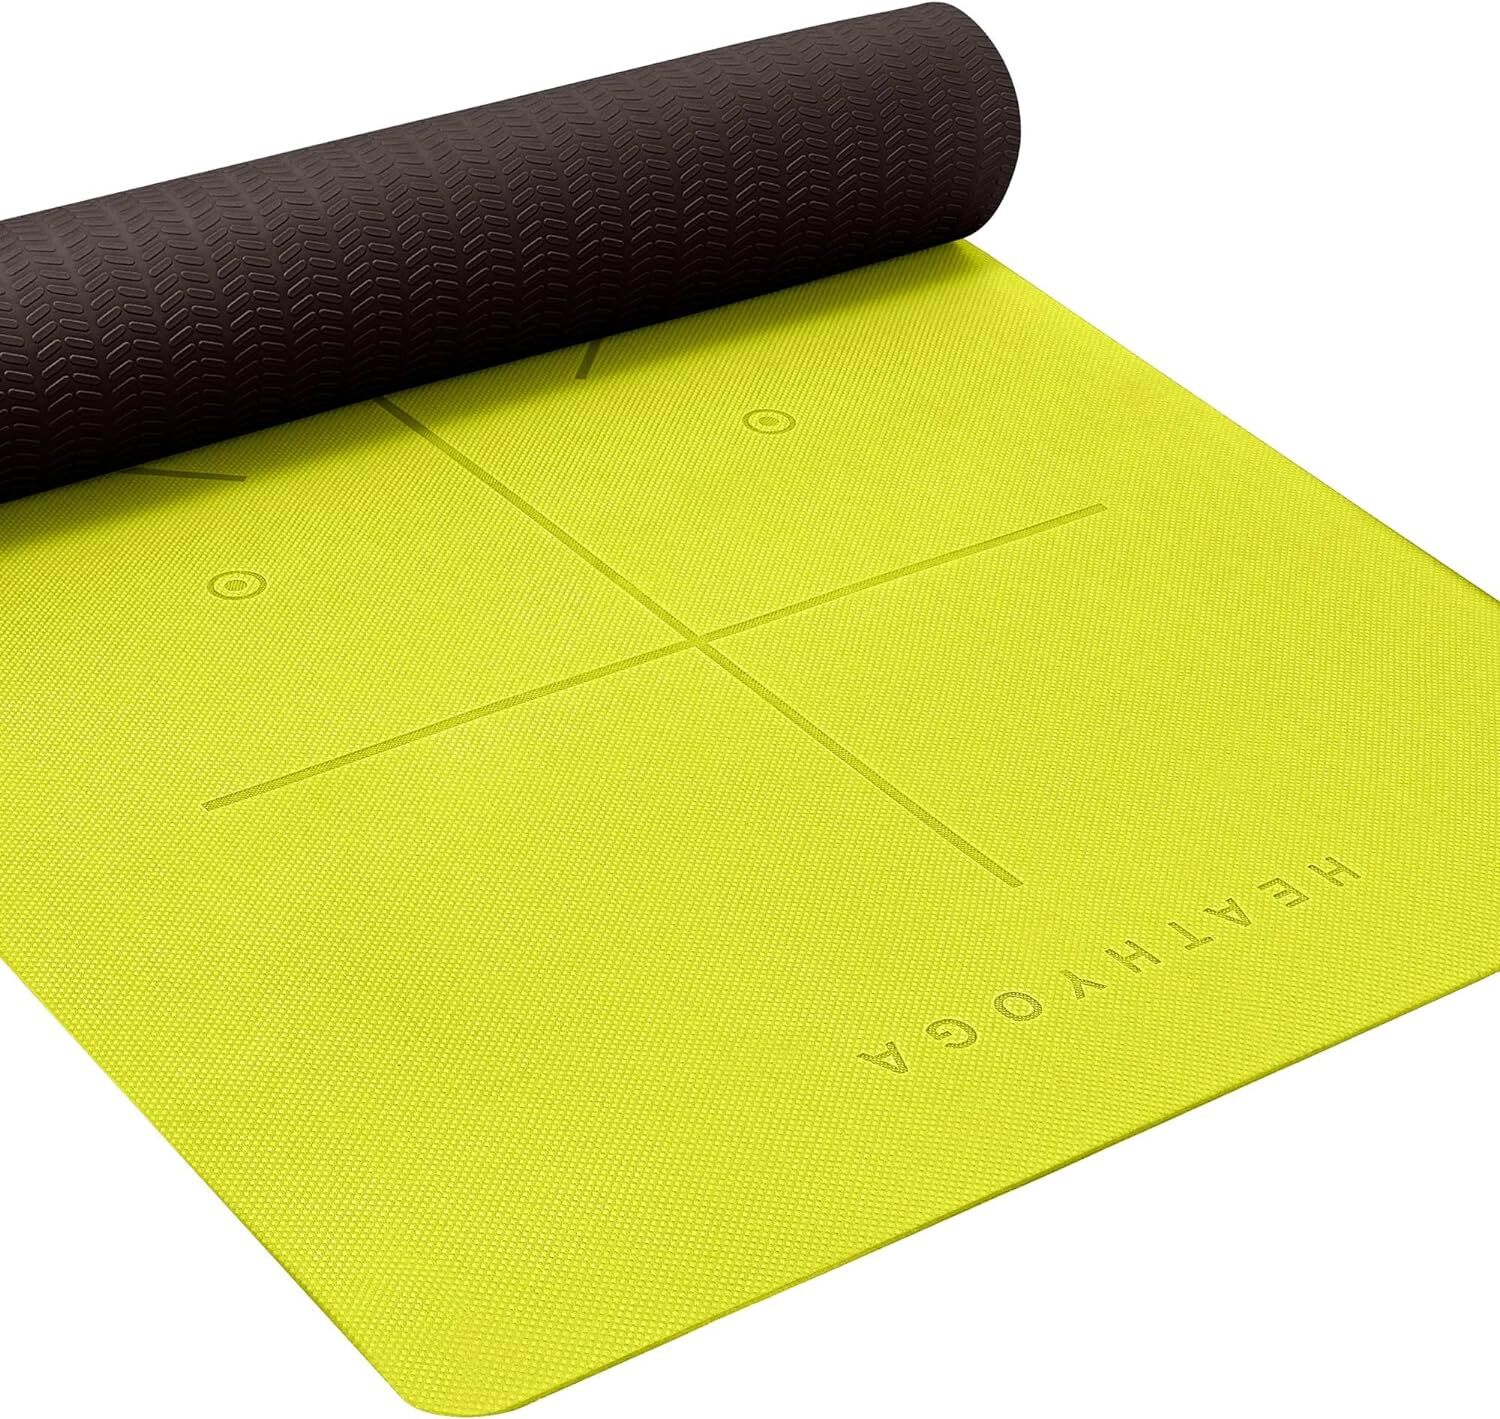 Heathyoga Eco Friendly Non Slip Yoga Mat Body Alignment System